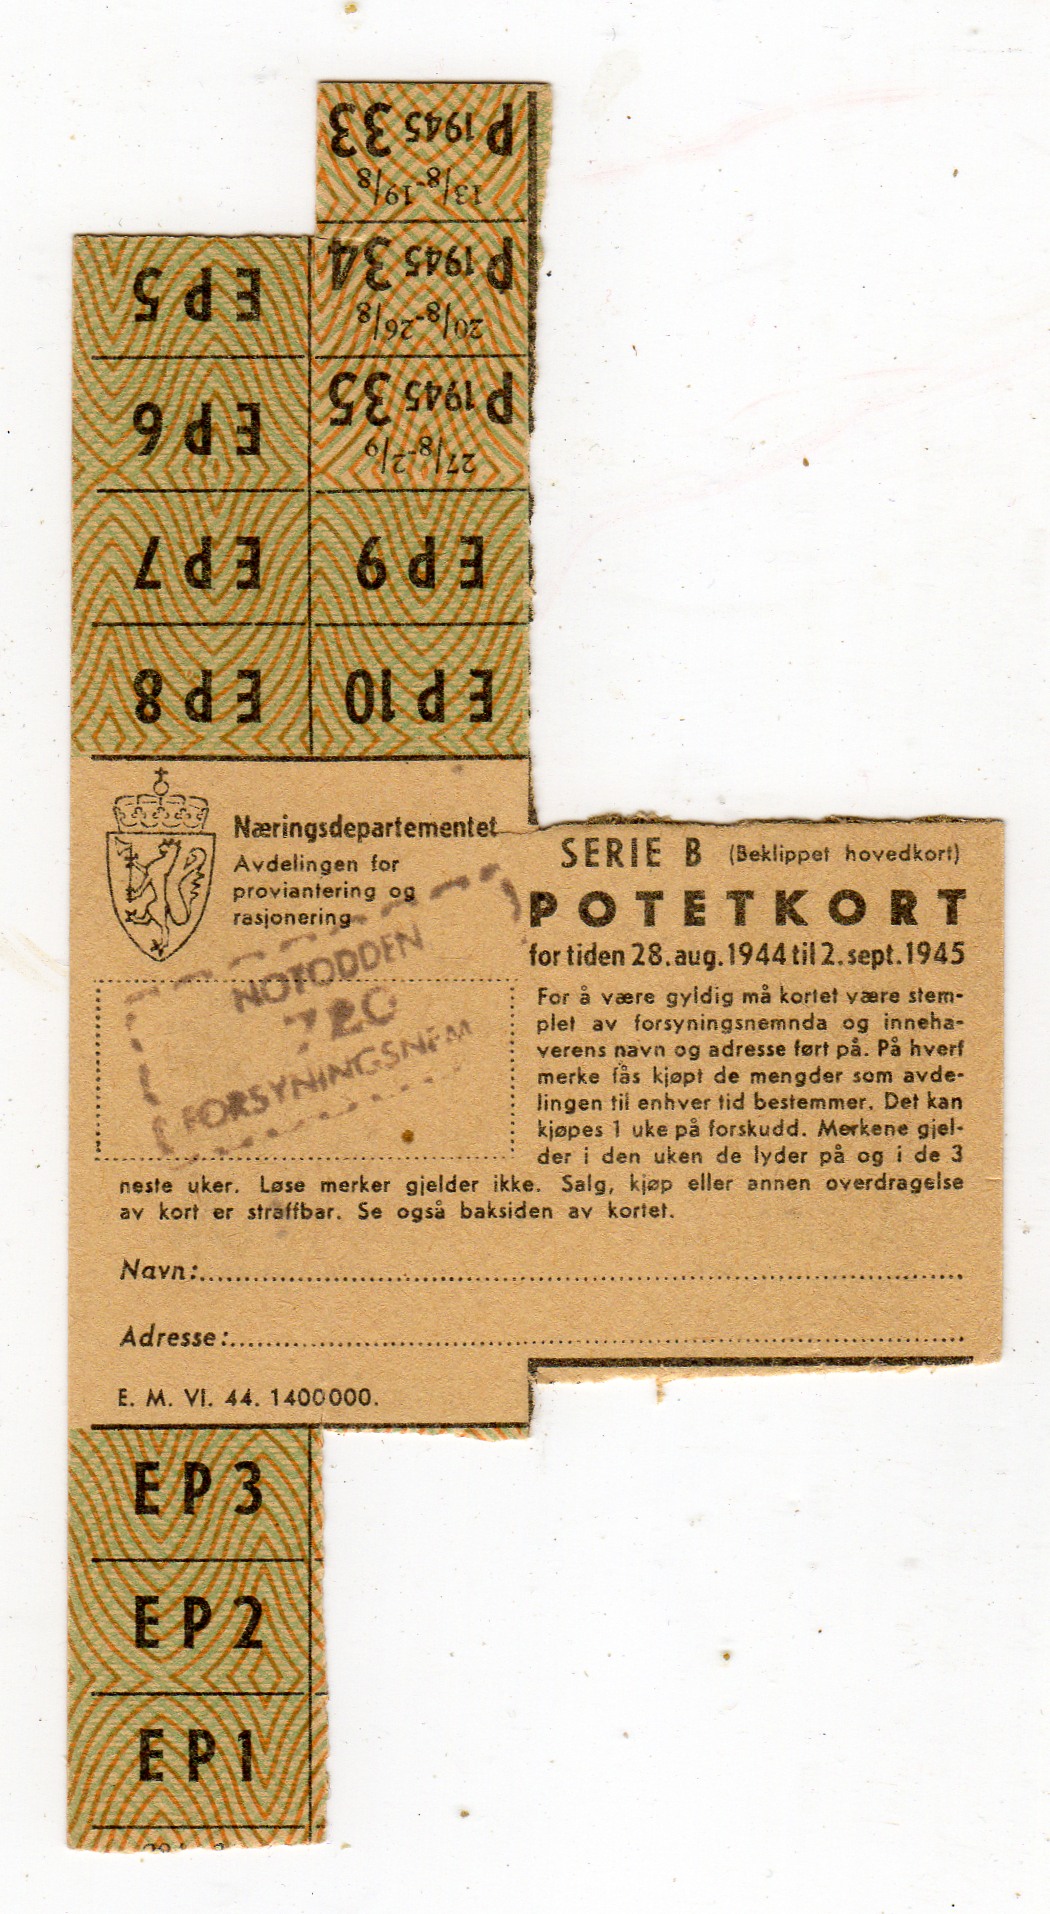 Potetkort Notodden 1945